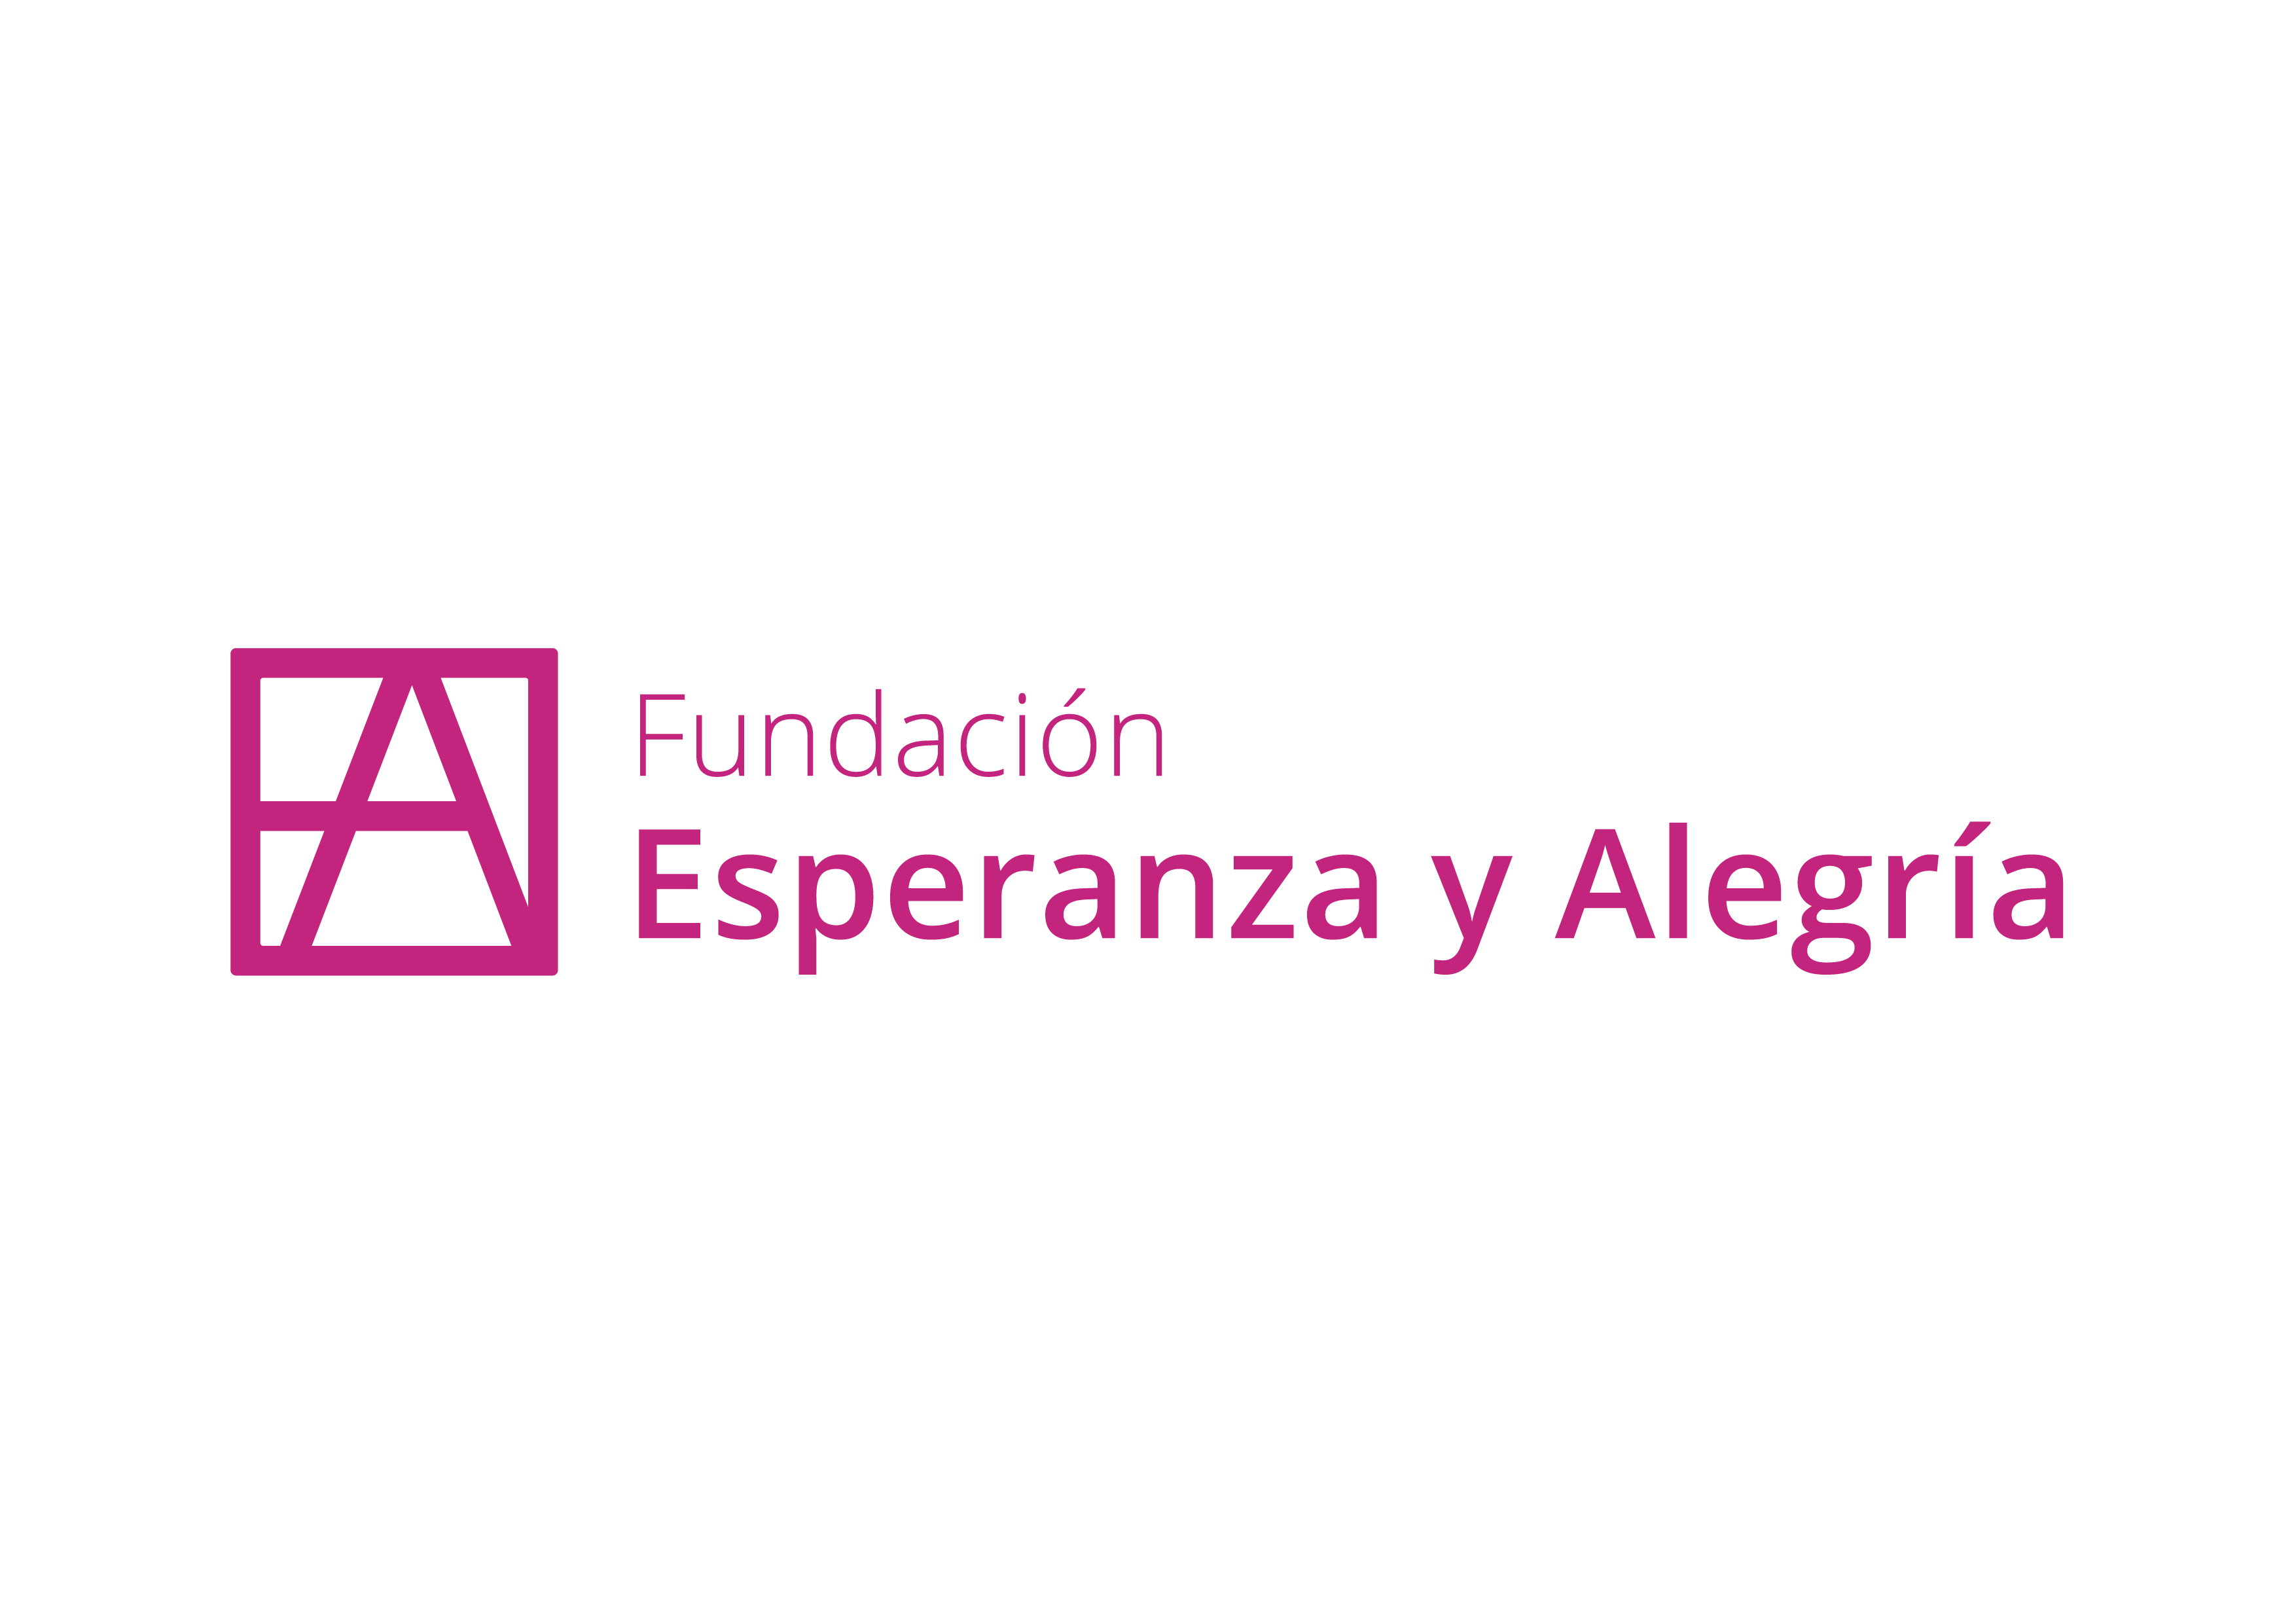 (c) Fundacionesperanzayalegria.org